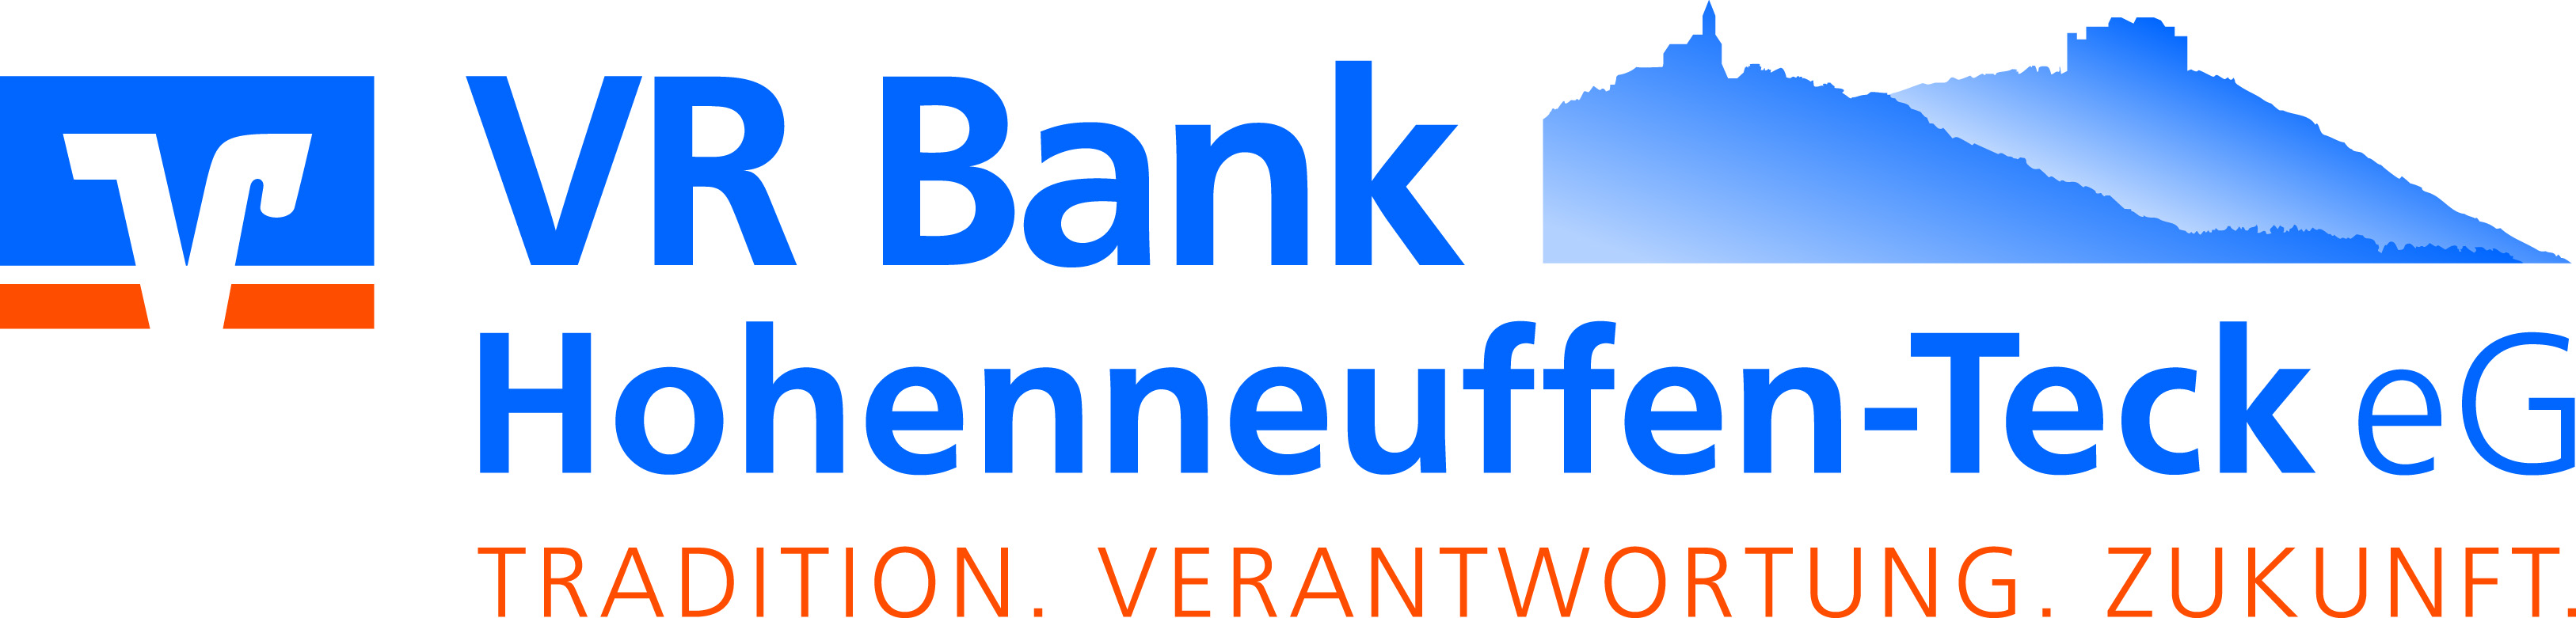 VRBank HT-Logo-MV.jpg